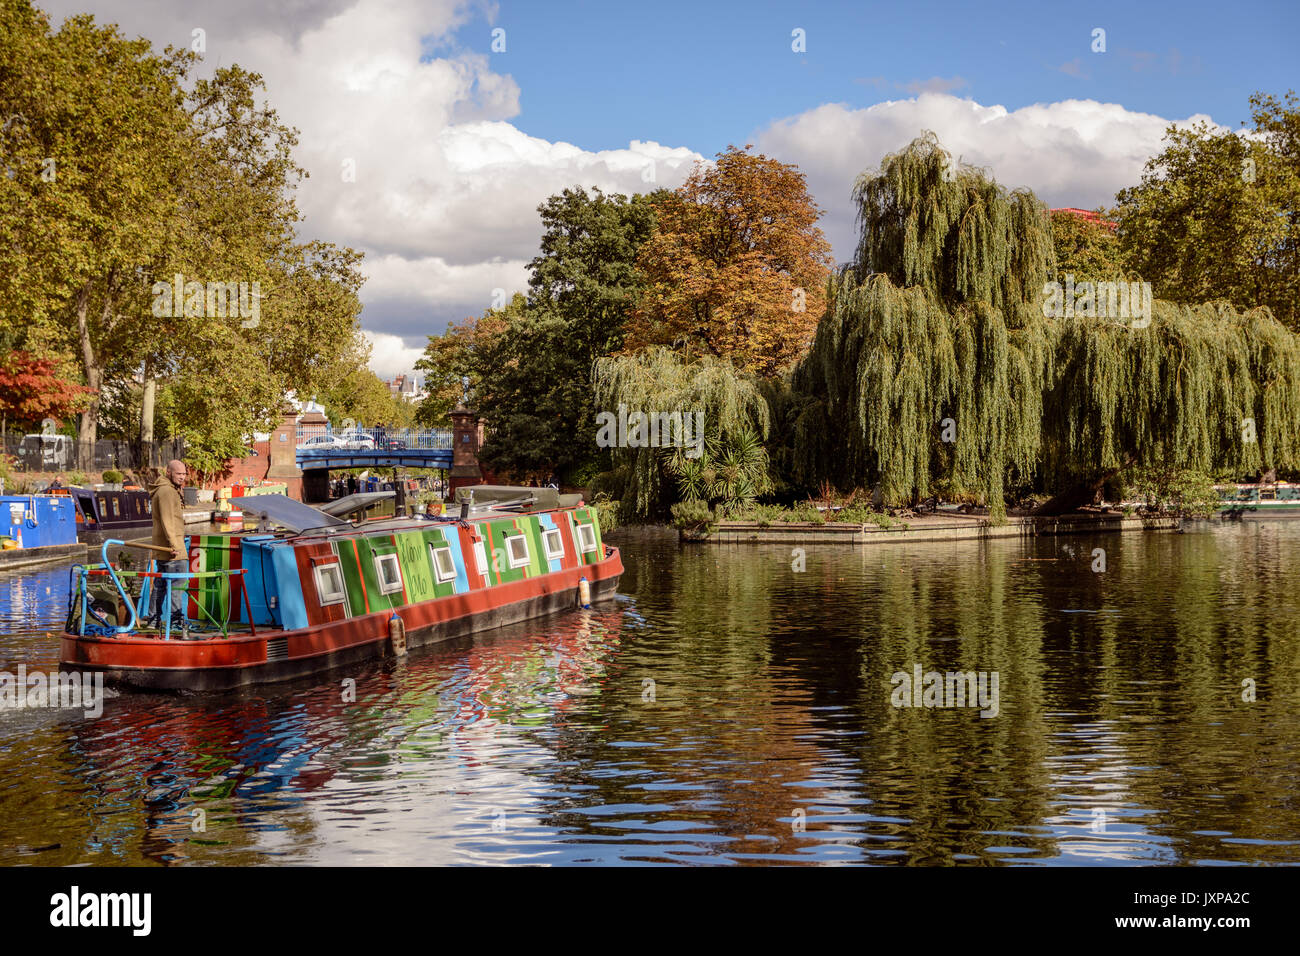 Narrow boats in Little Venice. London, 2017. Landscape format. Stock Photo